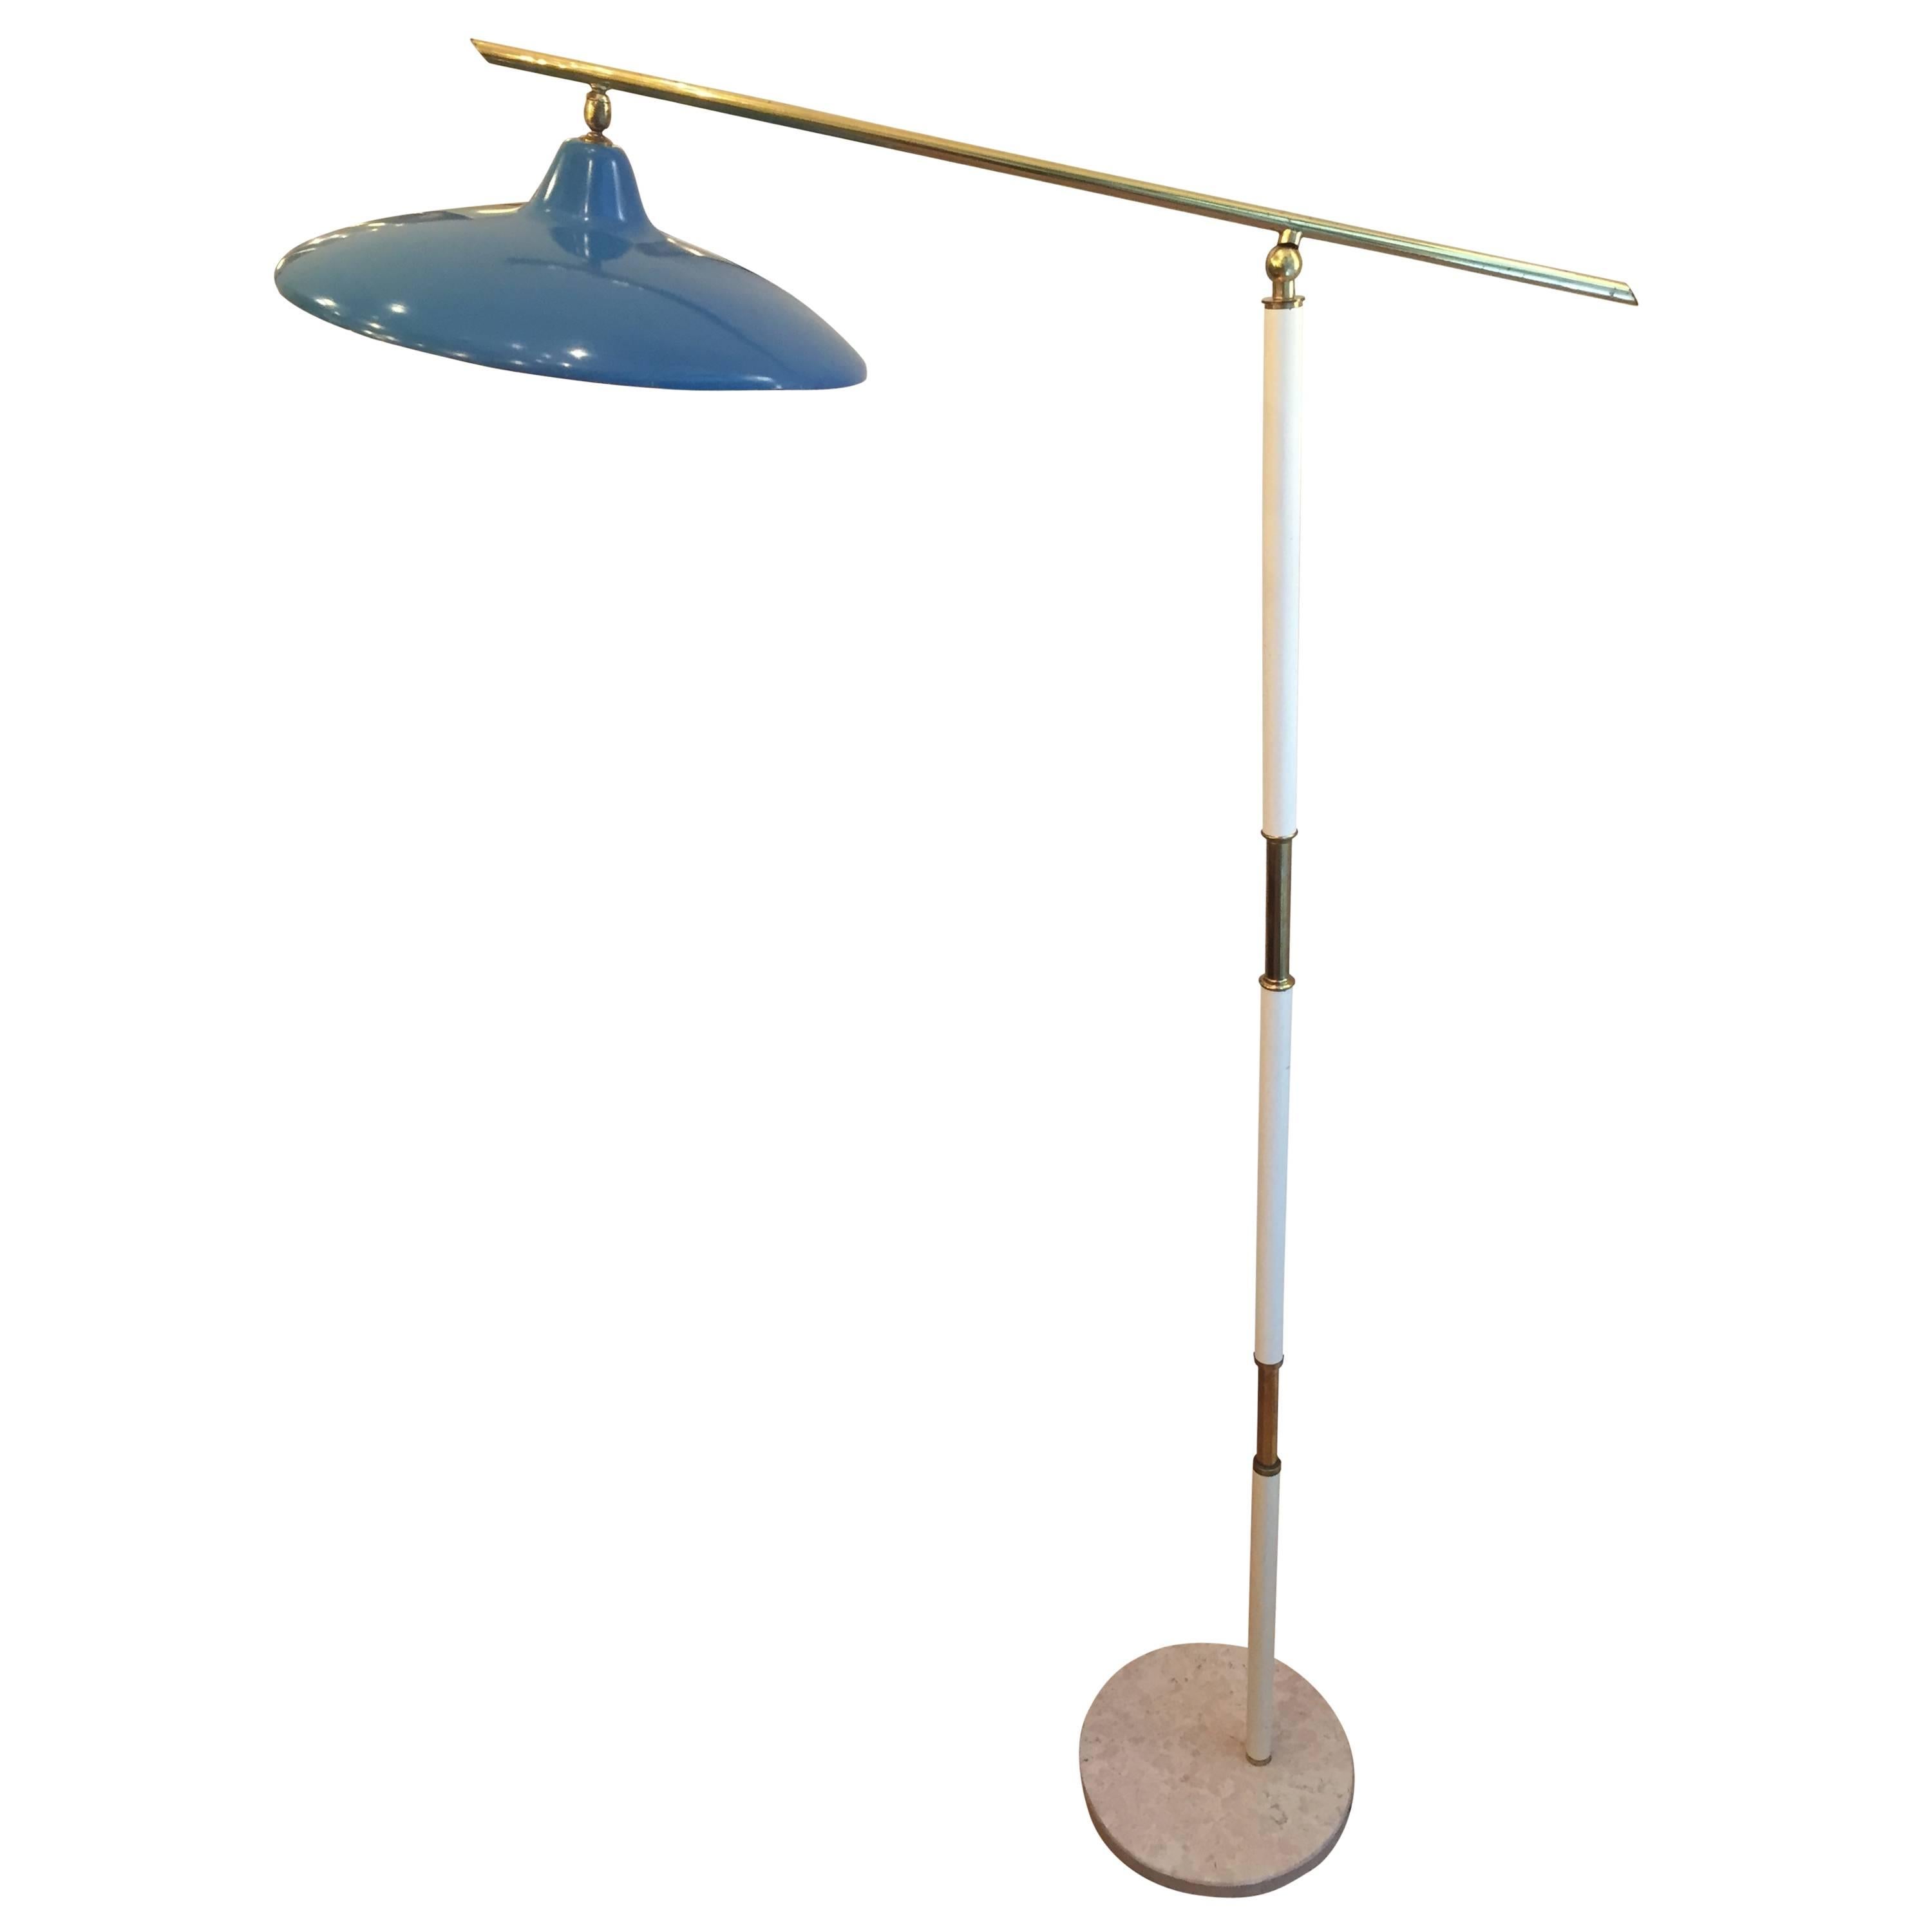 Italian Vintage Floor Lamp in the Stilnovo Style